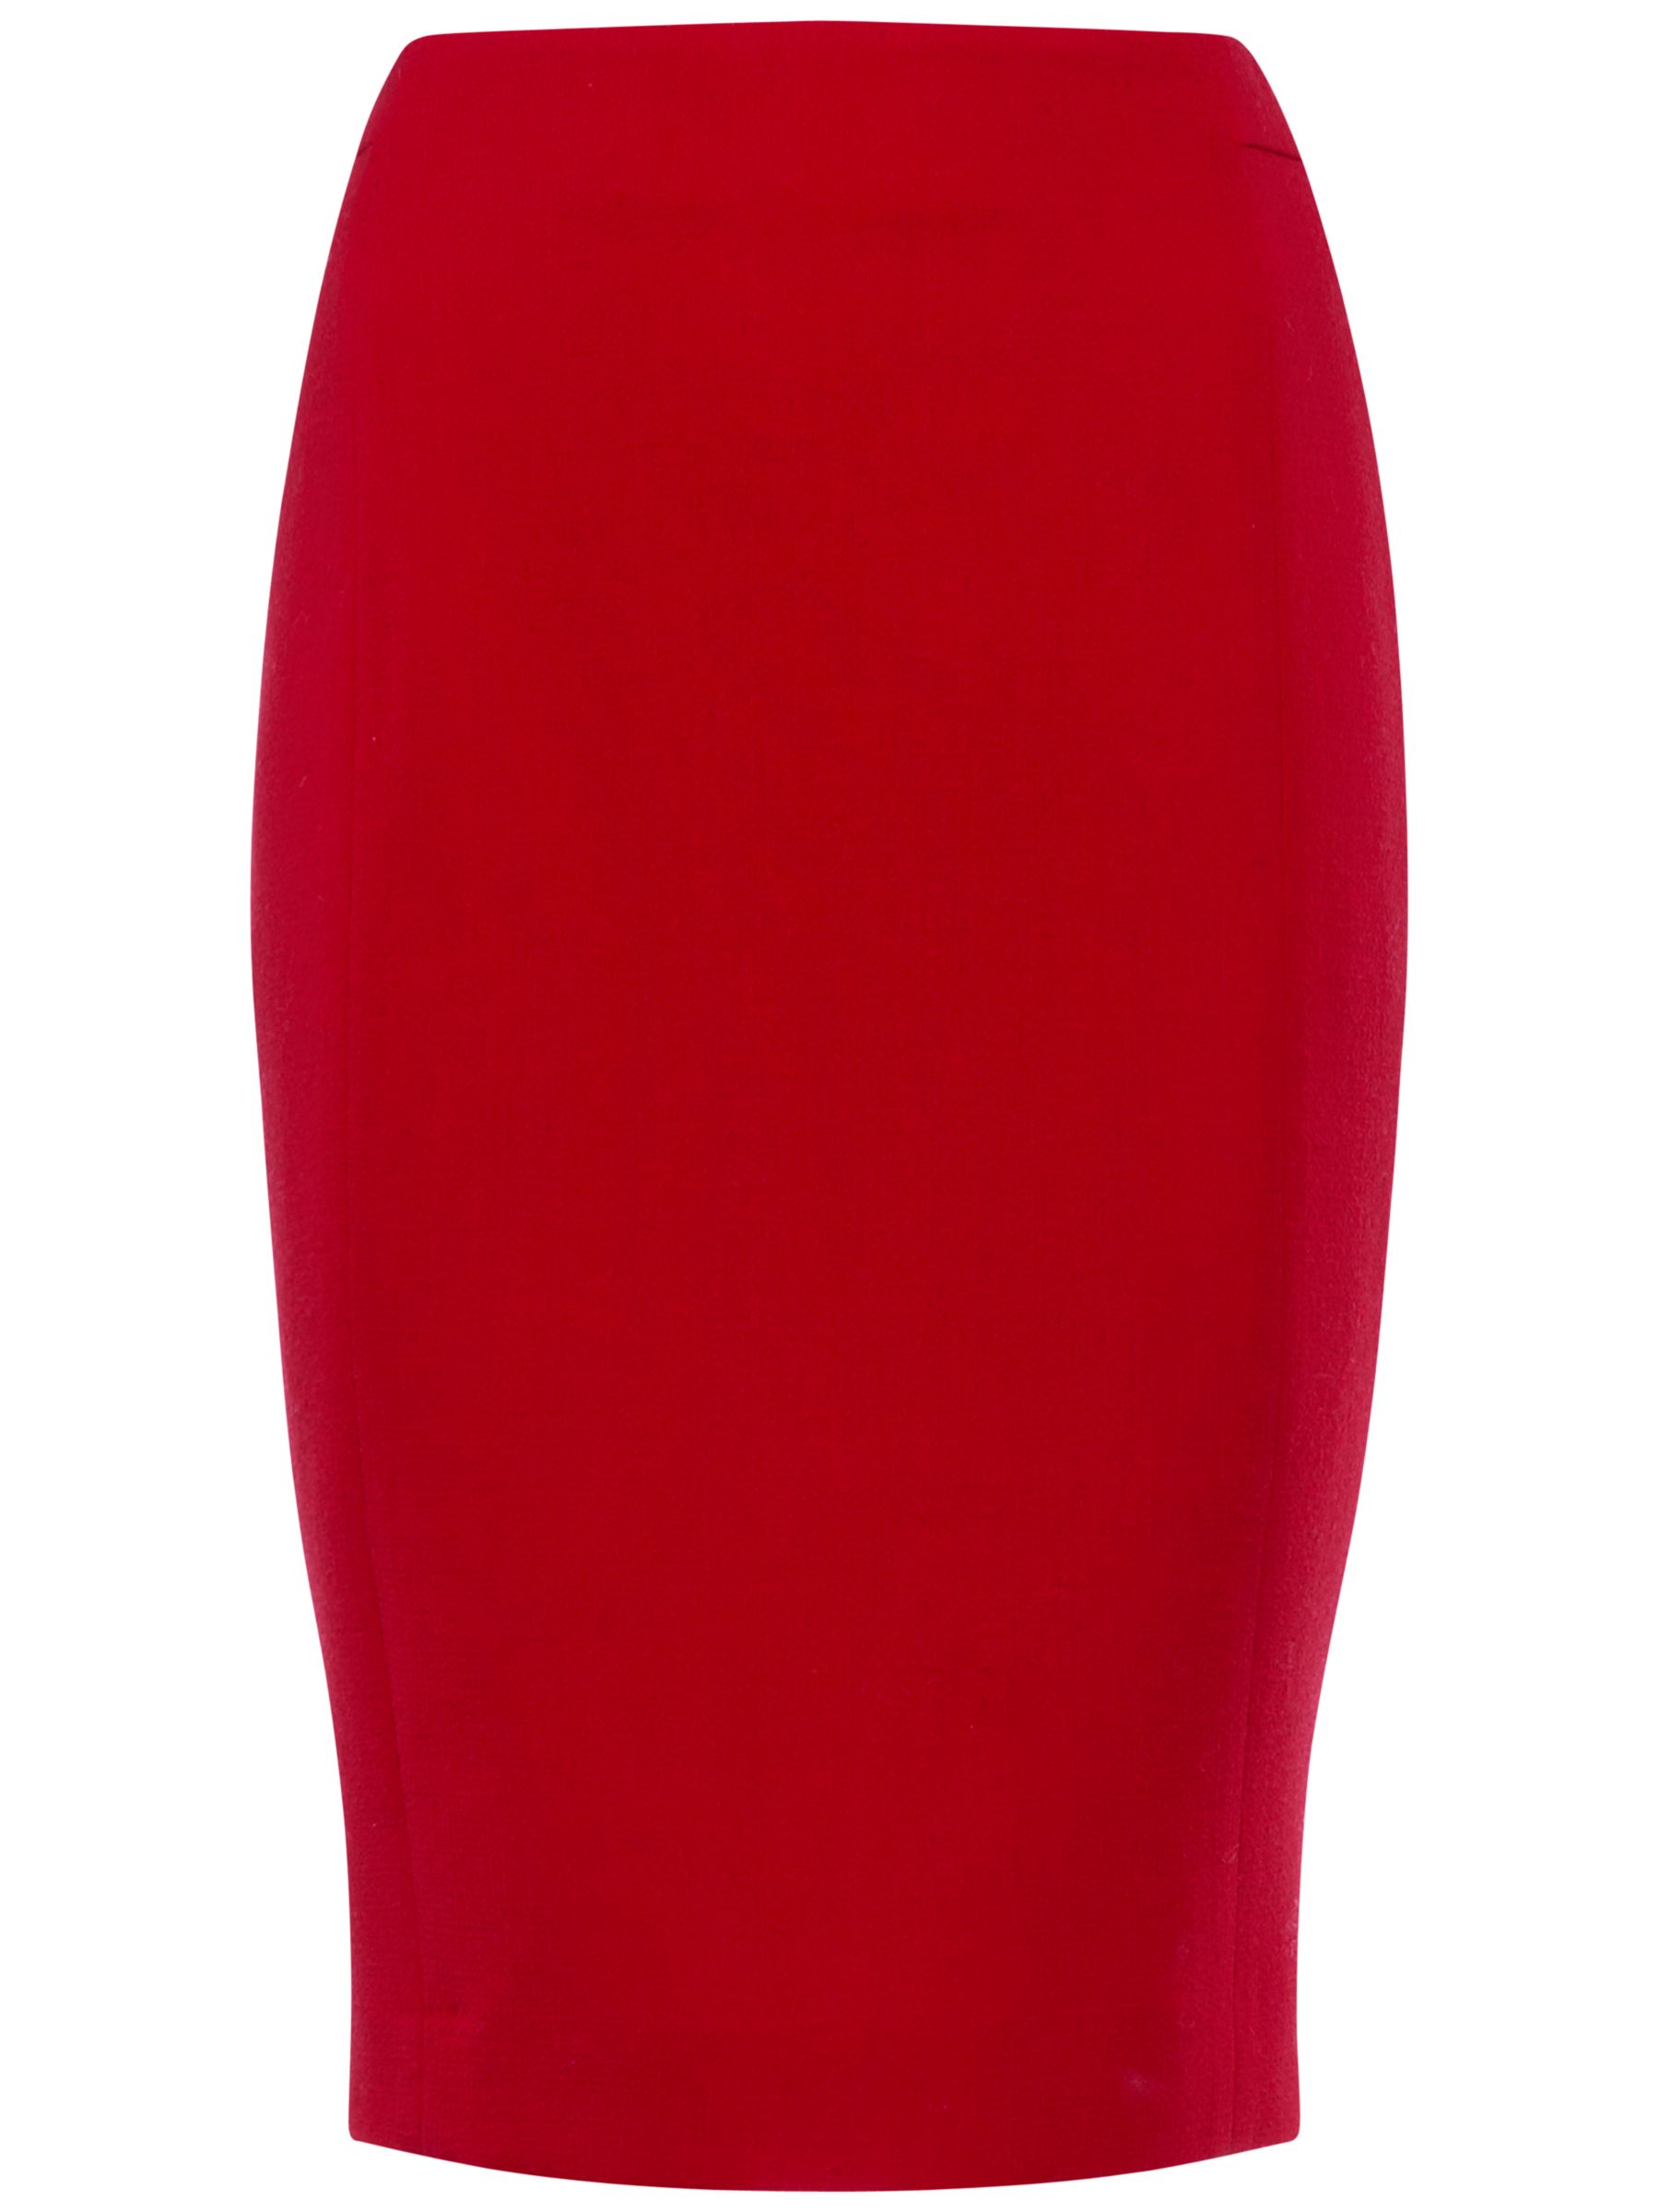 Jaeger Wool Crepe Pencil Skirt, Cherry Red